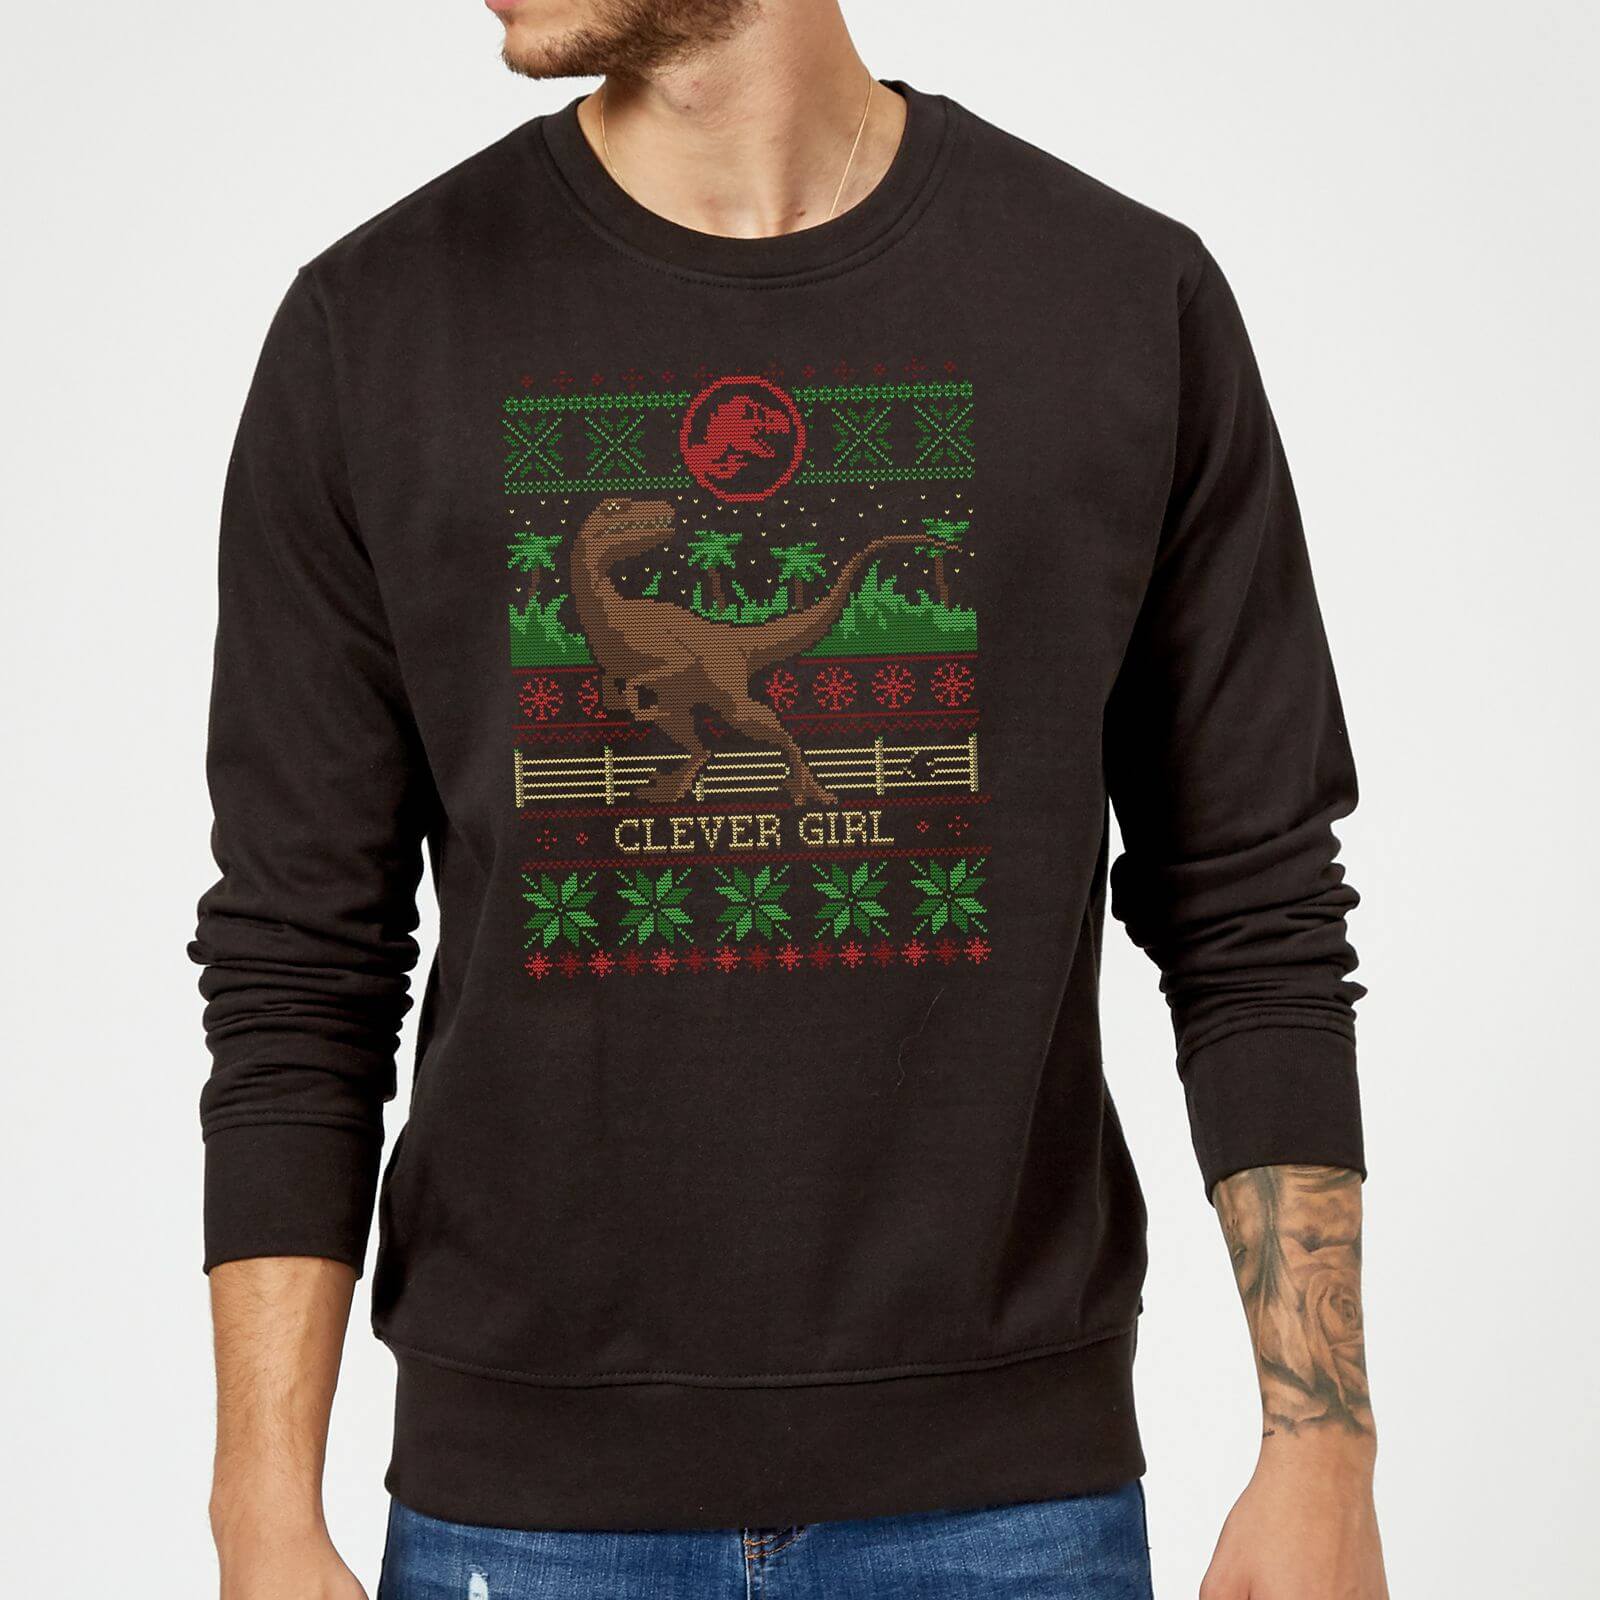 Jurassic Park Clever Girl Christmas Sweatshirt - Black - S